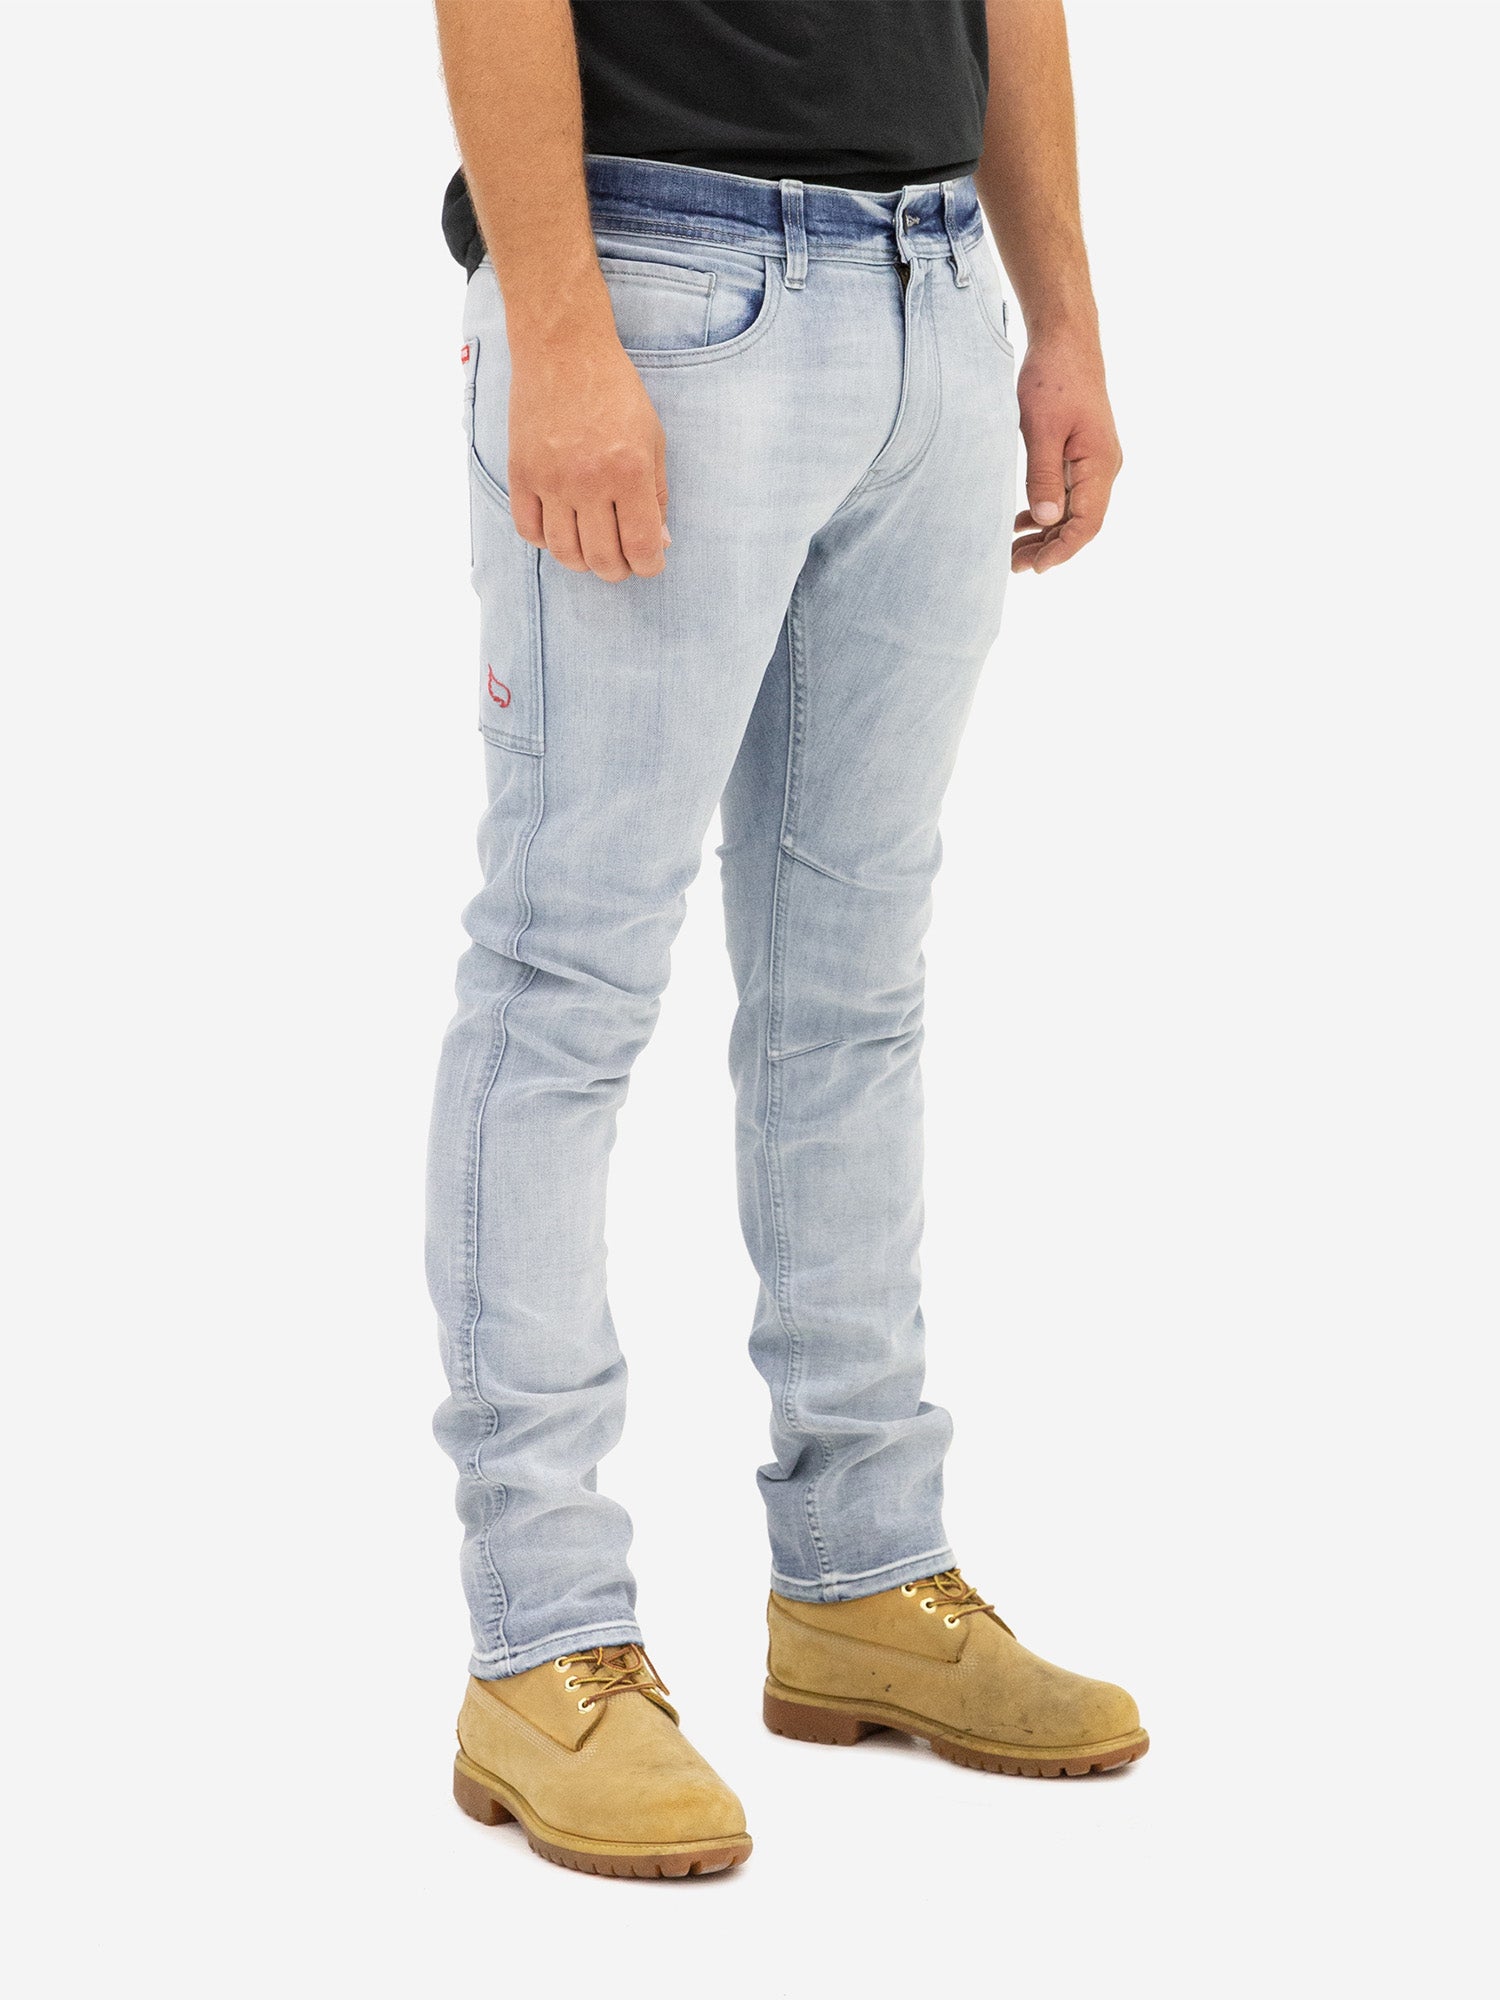 Workwear Slim Fit Jeans - Light Bleached - Saint USA